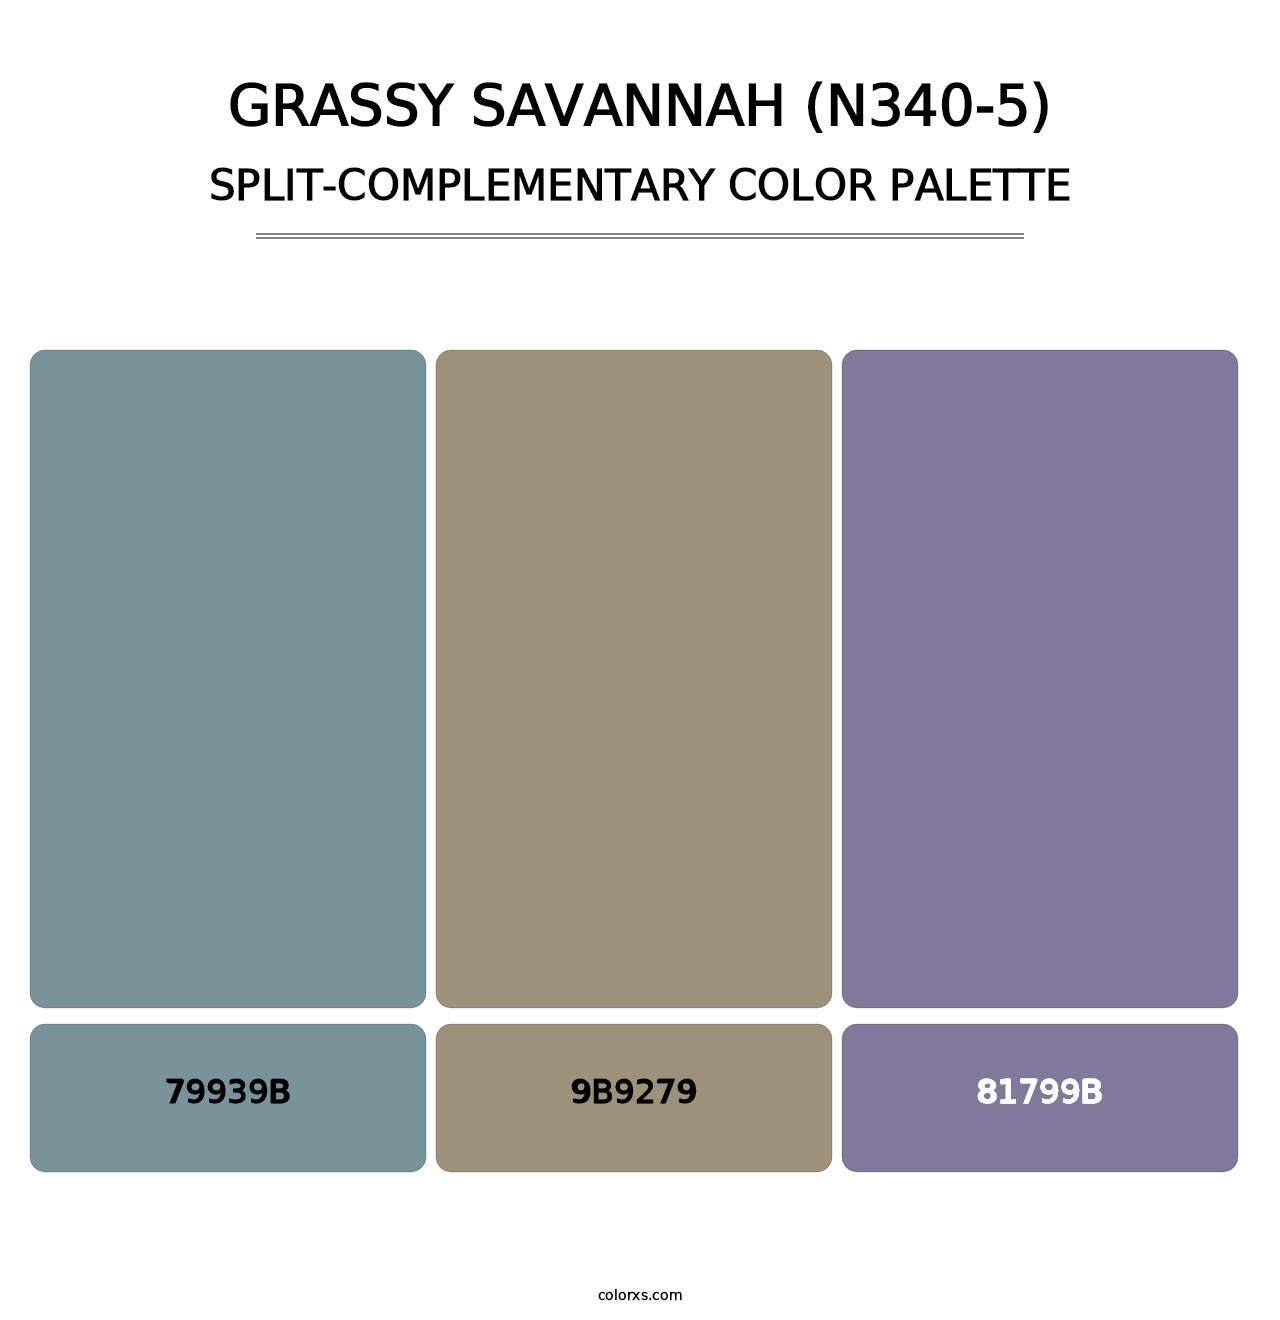 Grassy Savannah (N340-5) - Split-Complementary Color Palette